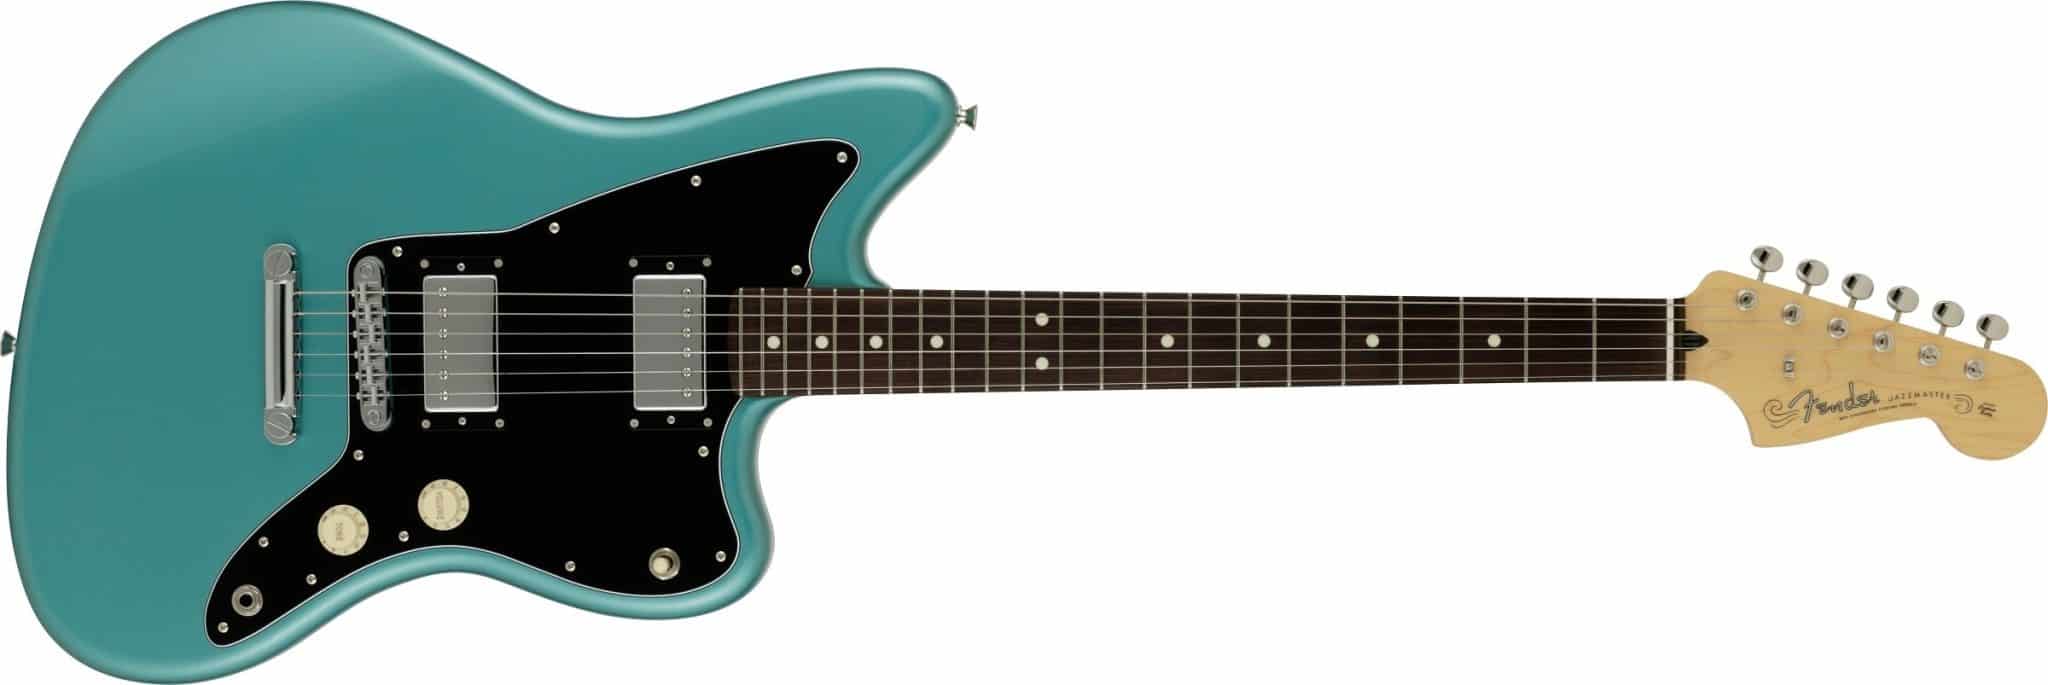 Fender Adjusto-Matic Jazzmaster HH in Teal Green Metallic